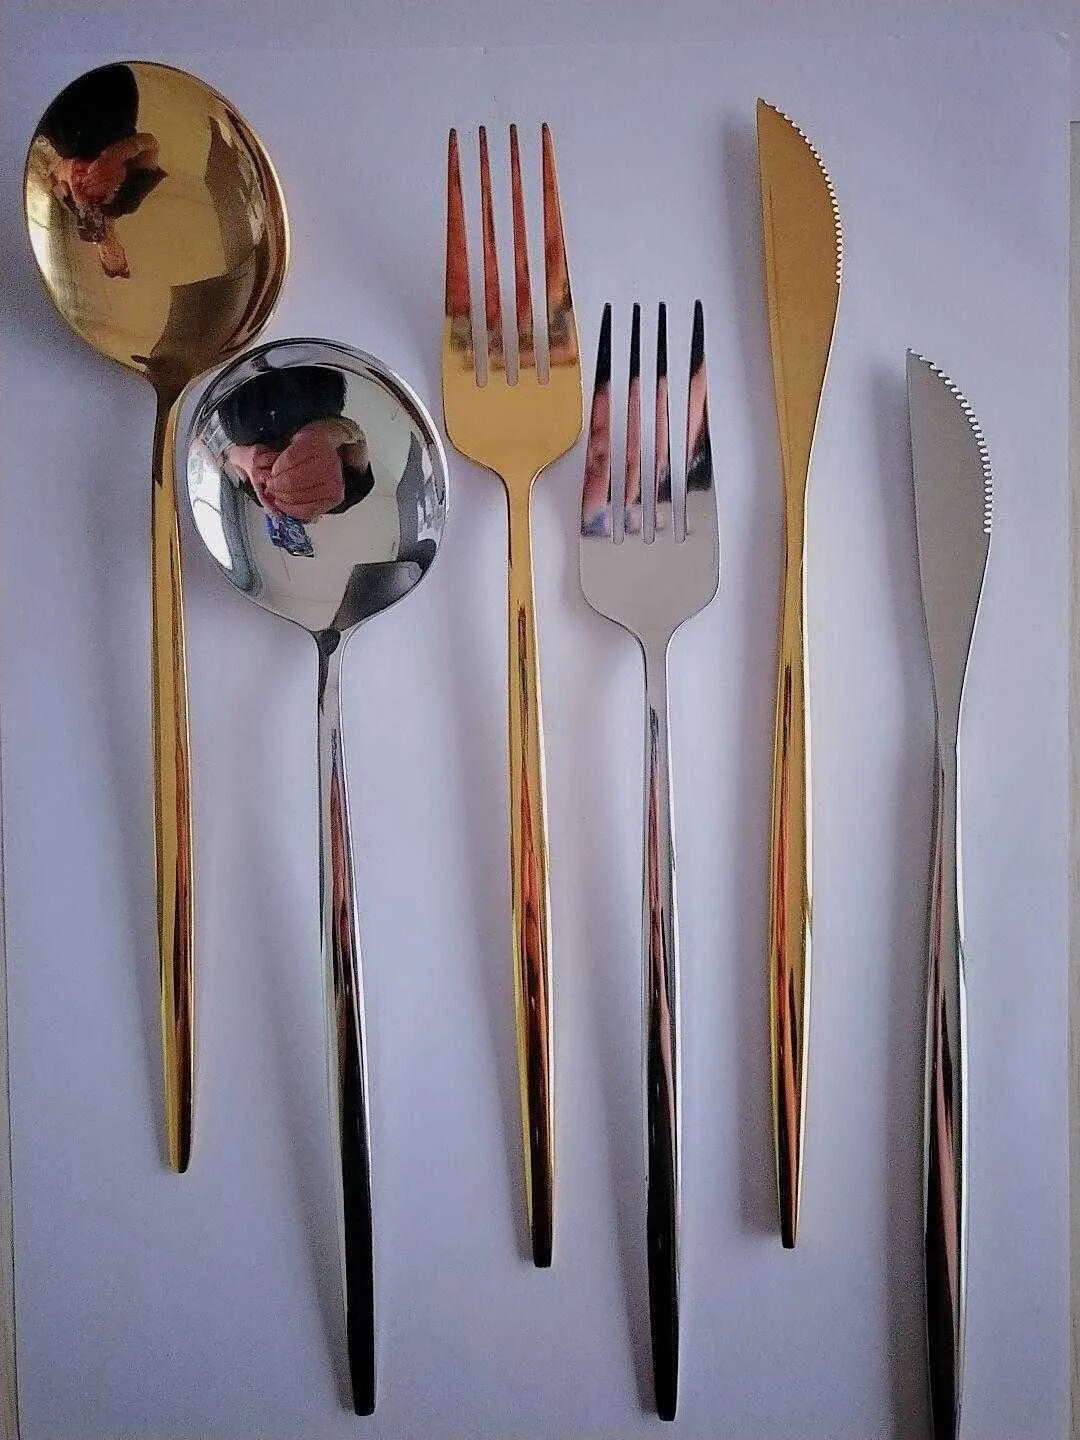 Stainless Steel Mirror Tableware Gold Knife Meal Spoon Fork Tea Spoon Flatware Simple Exquisite Western Dinner Cutlery HHA690